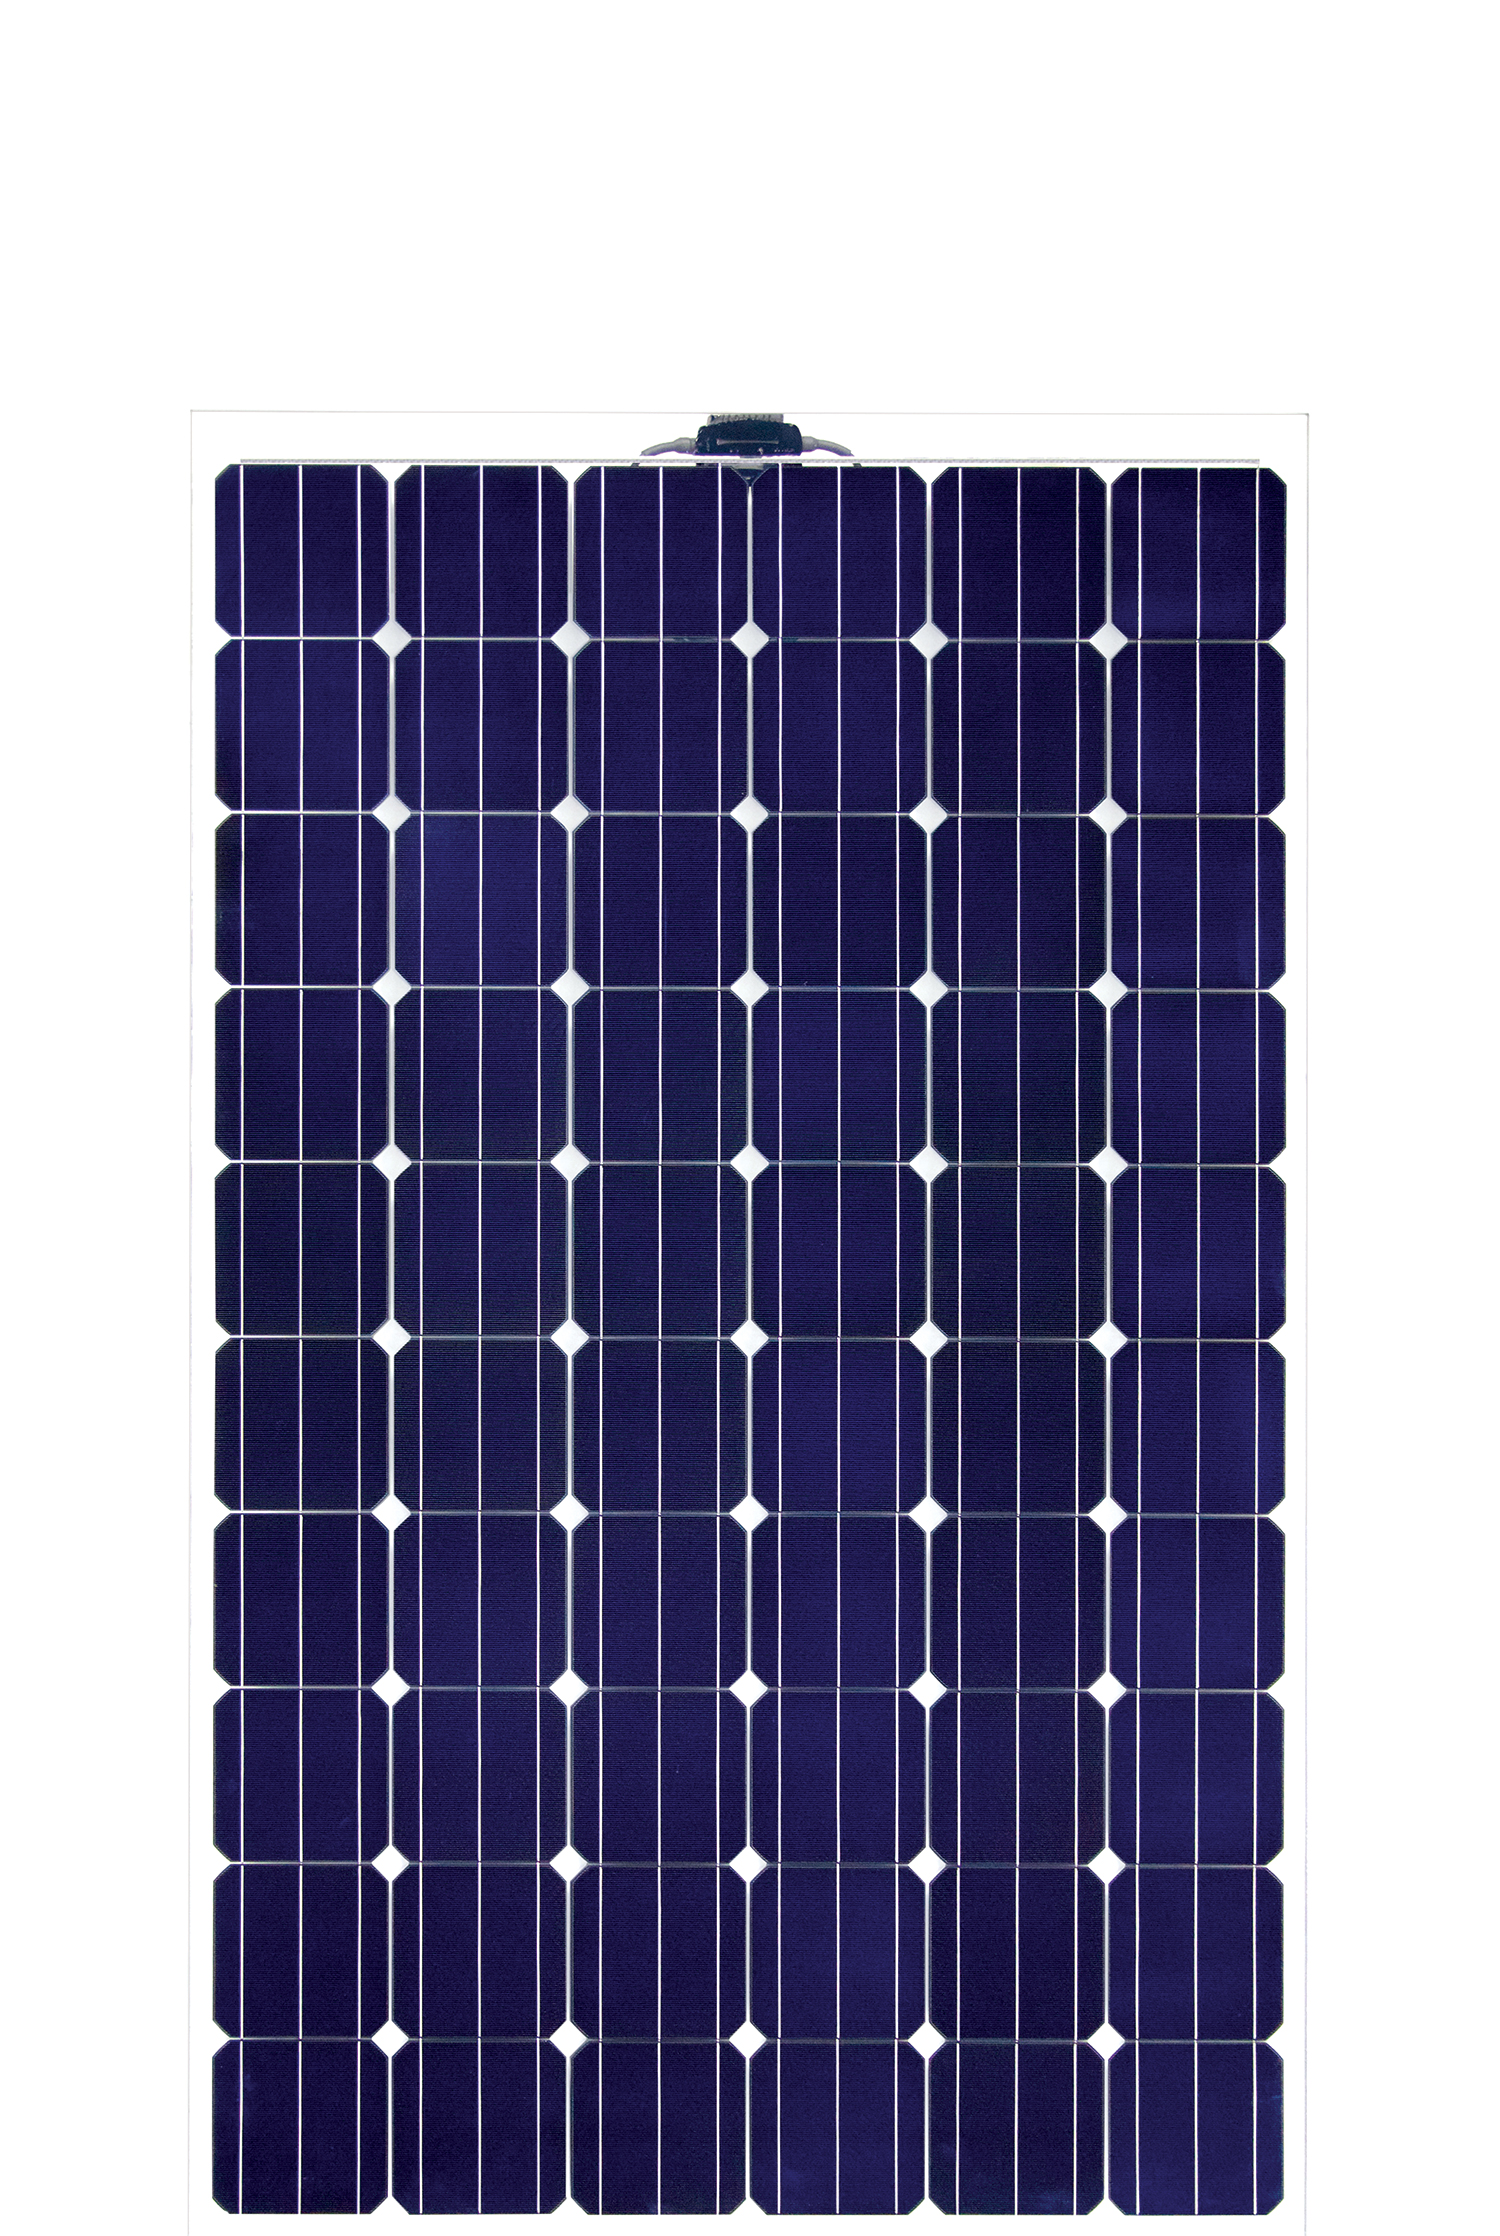 Sunpreme MAXIMA GXB 320 solar panel